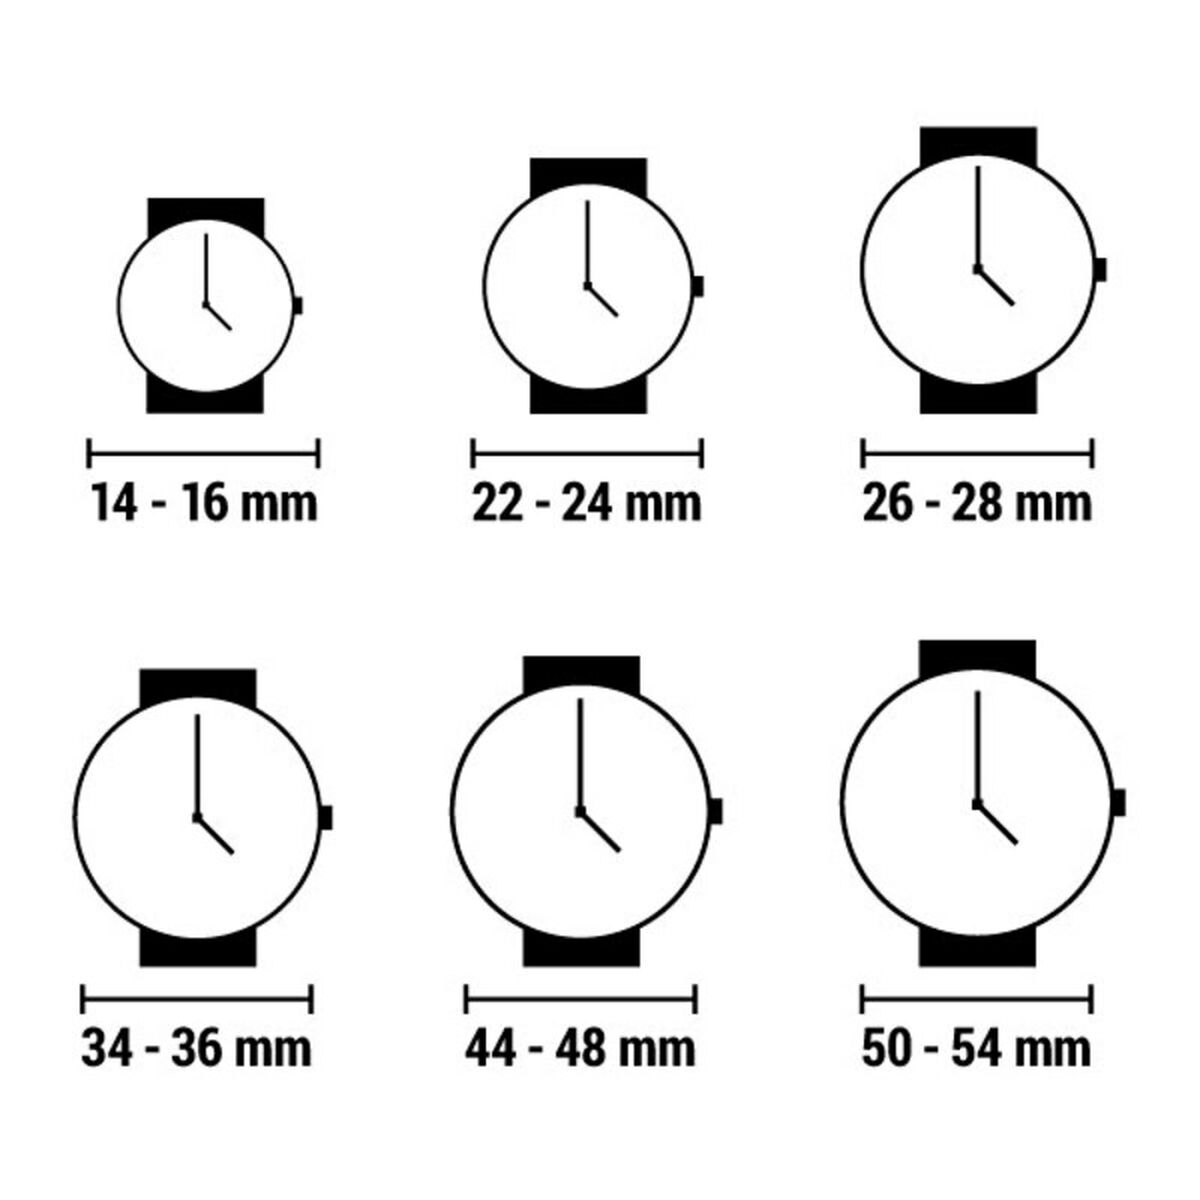 Horloge Dames Laura Biagiotti LB0021S-01Z (Ø 18 mm)